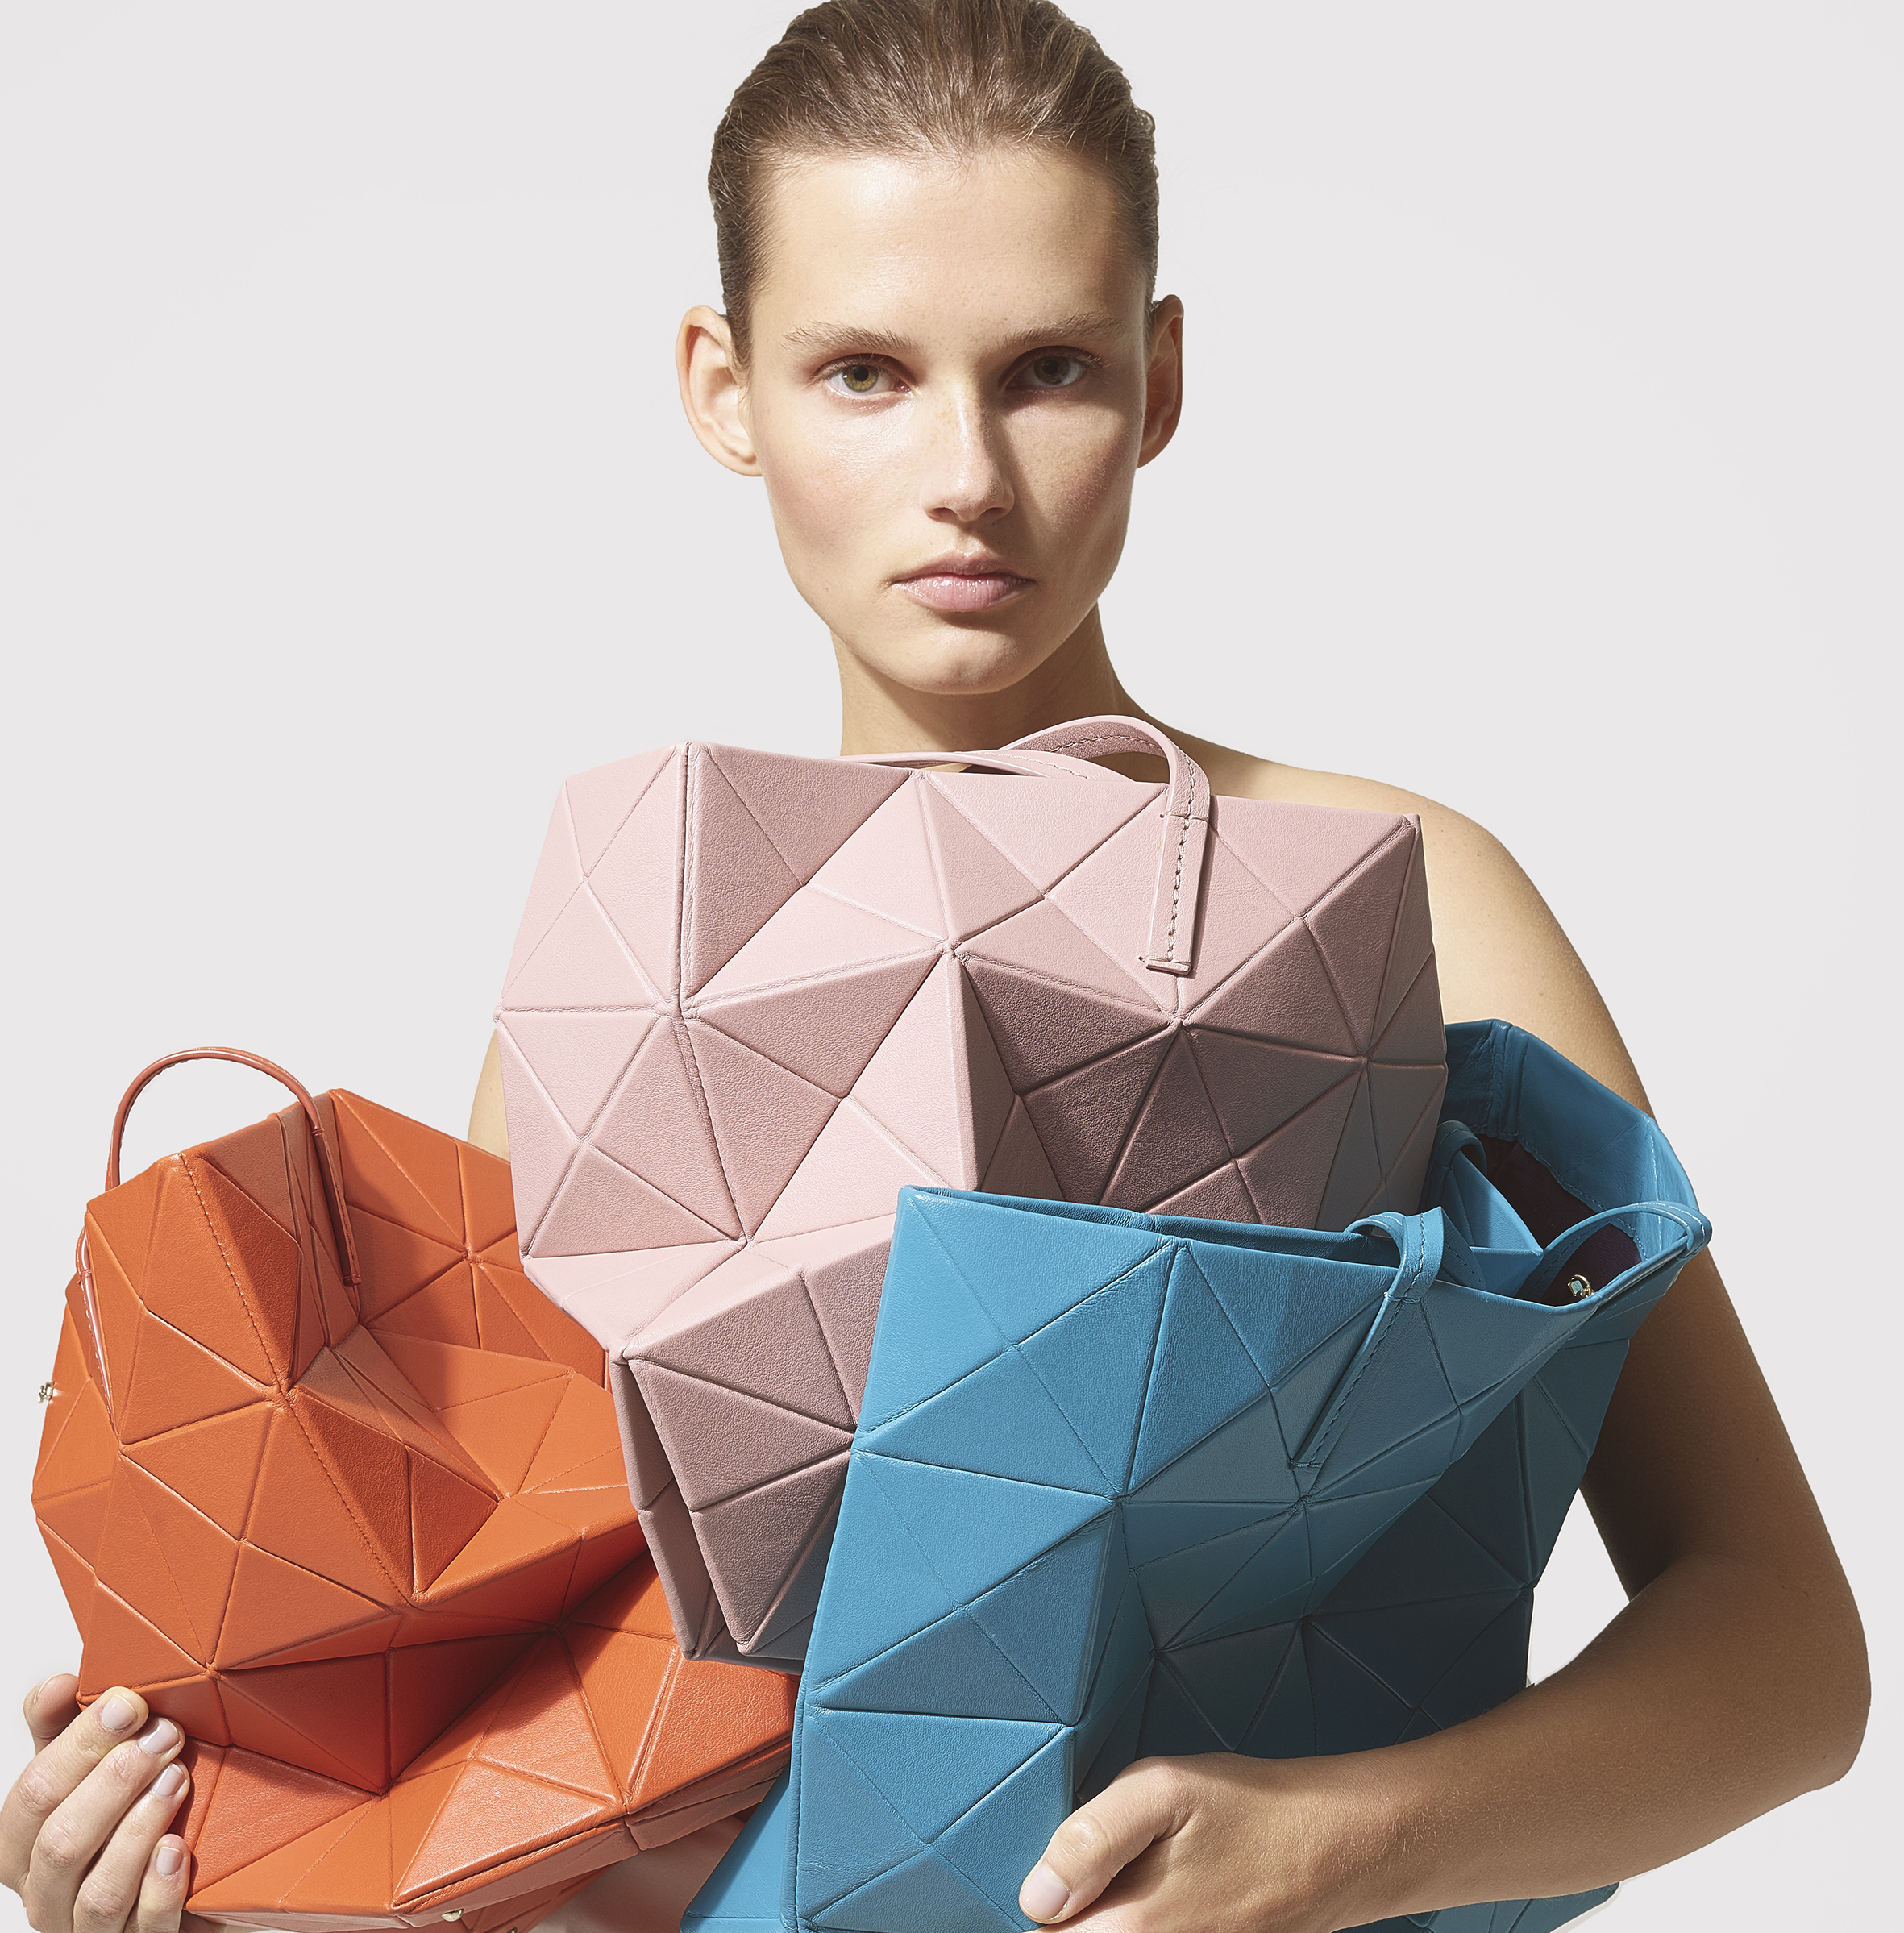 SS17 García accessories: the Origami bag